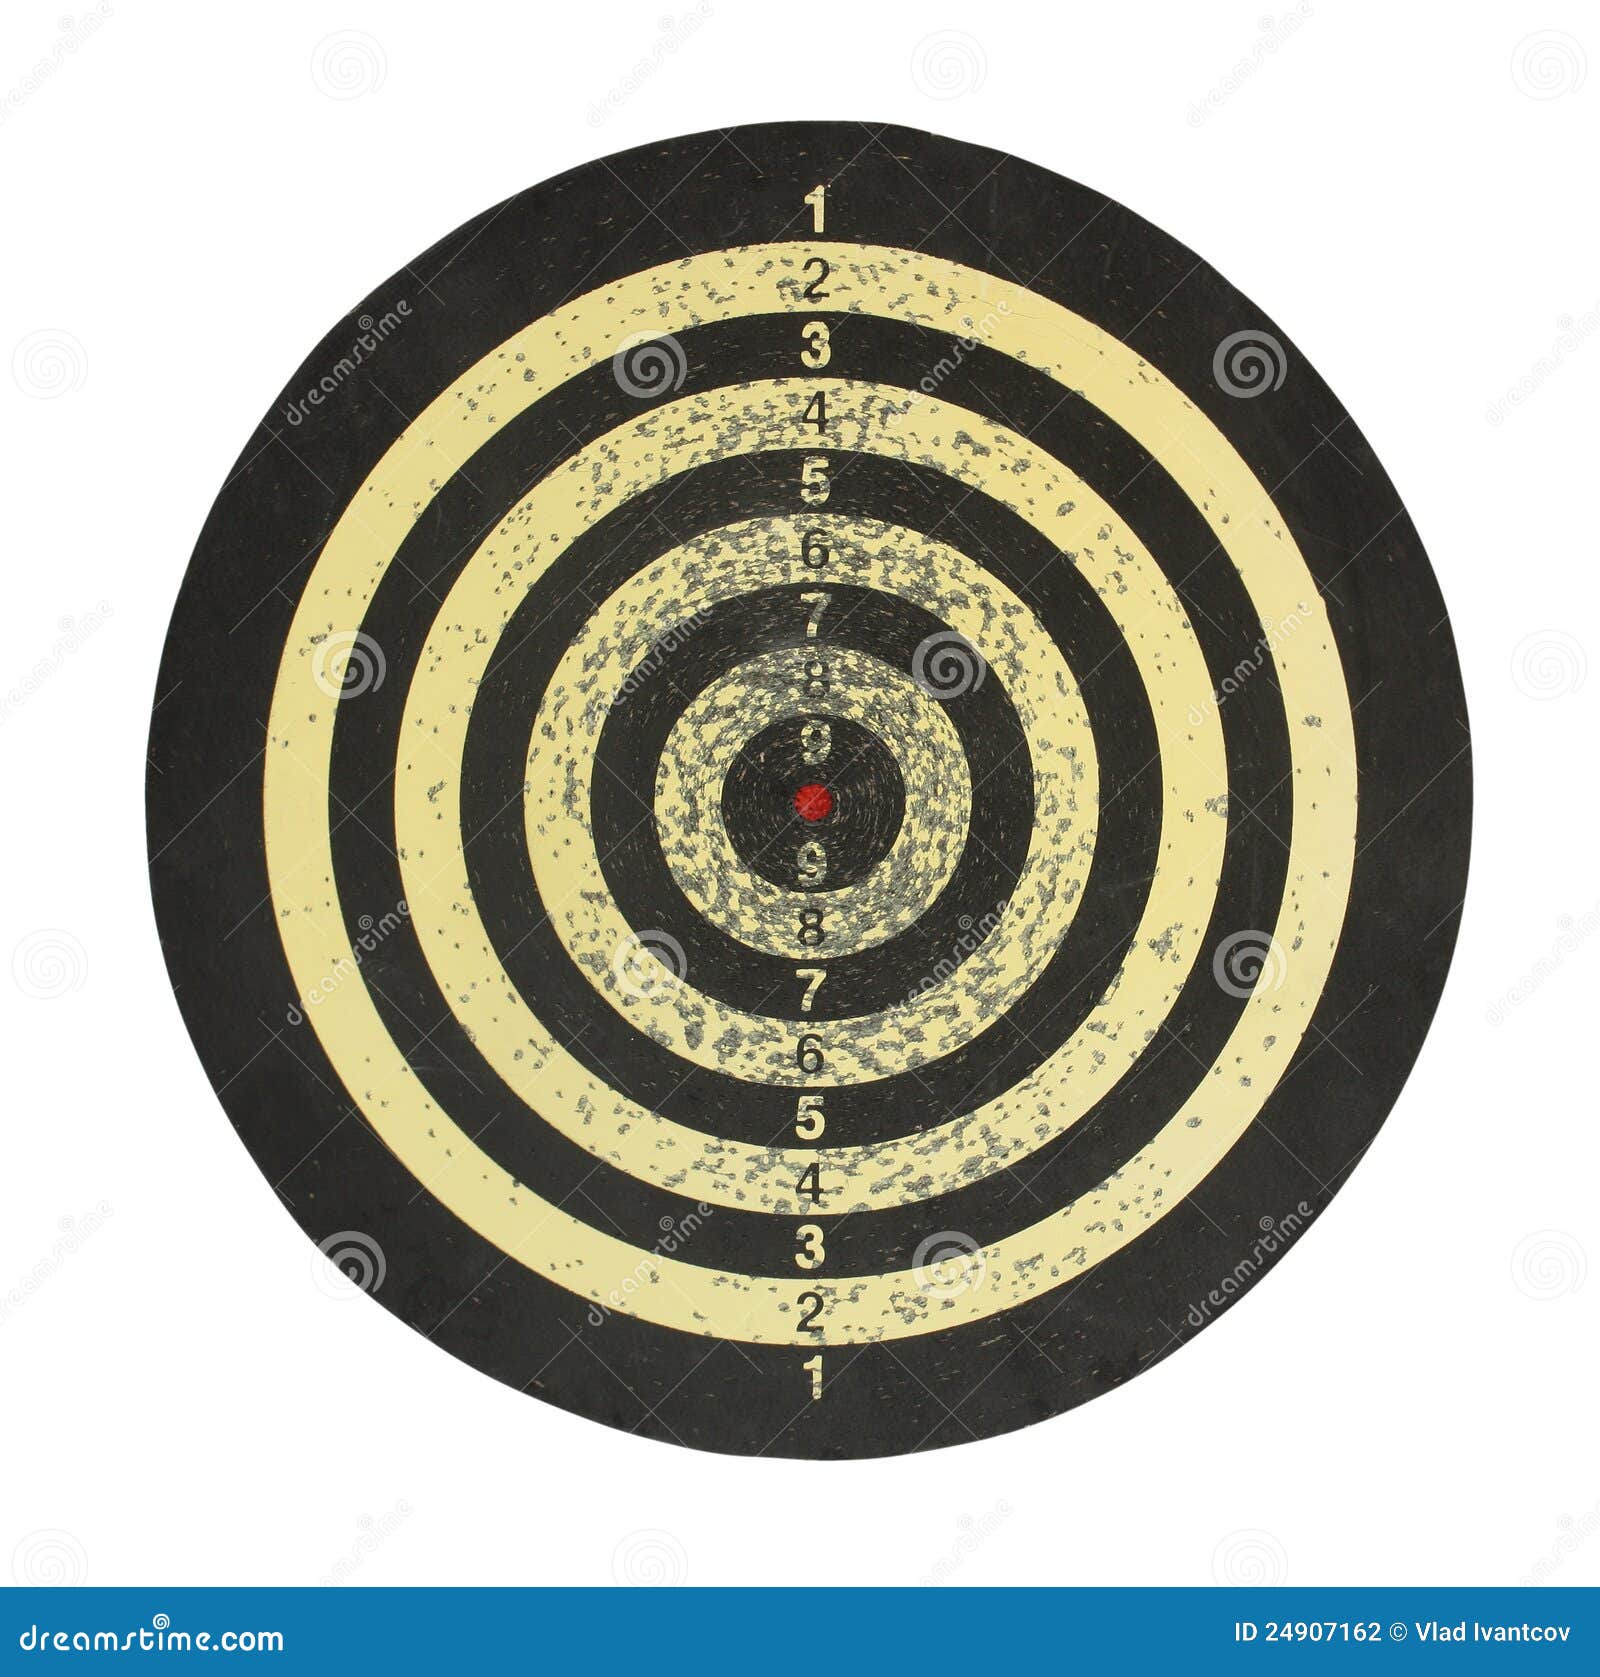 target-darts-24907162.jpg